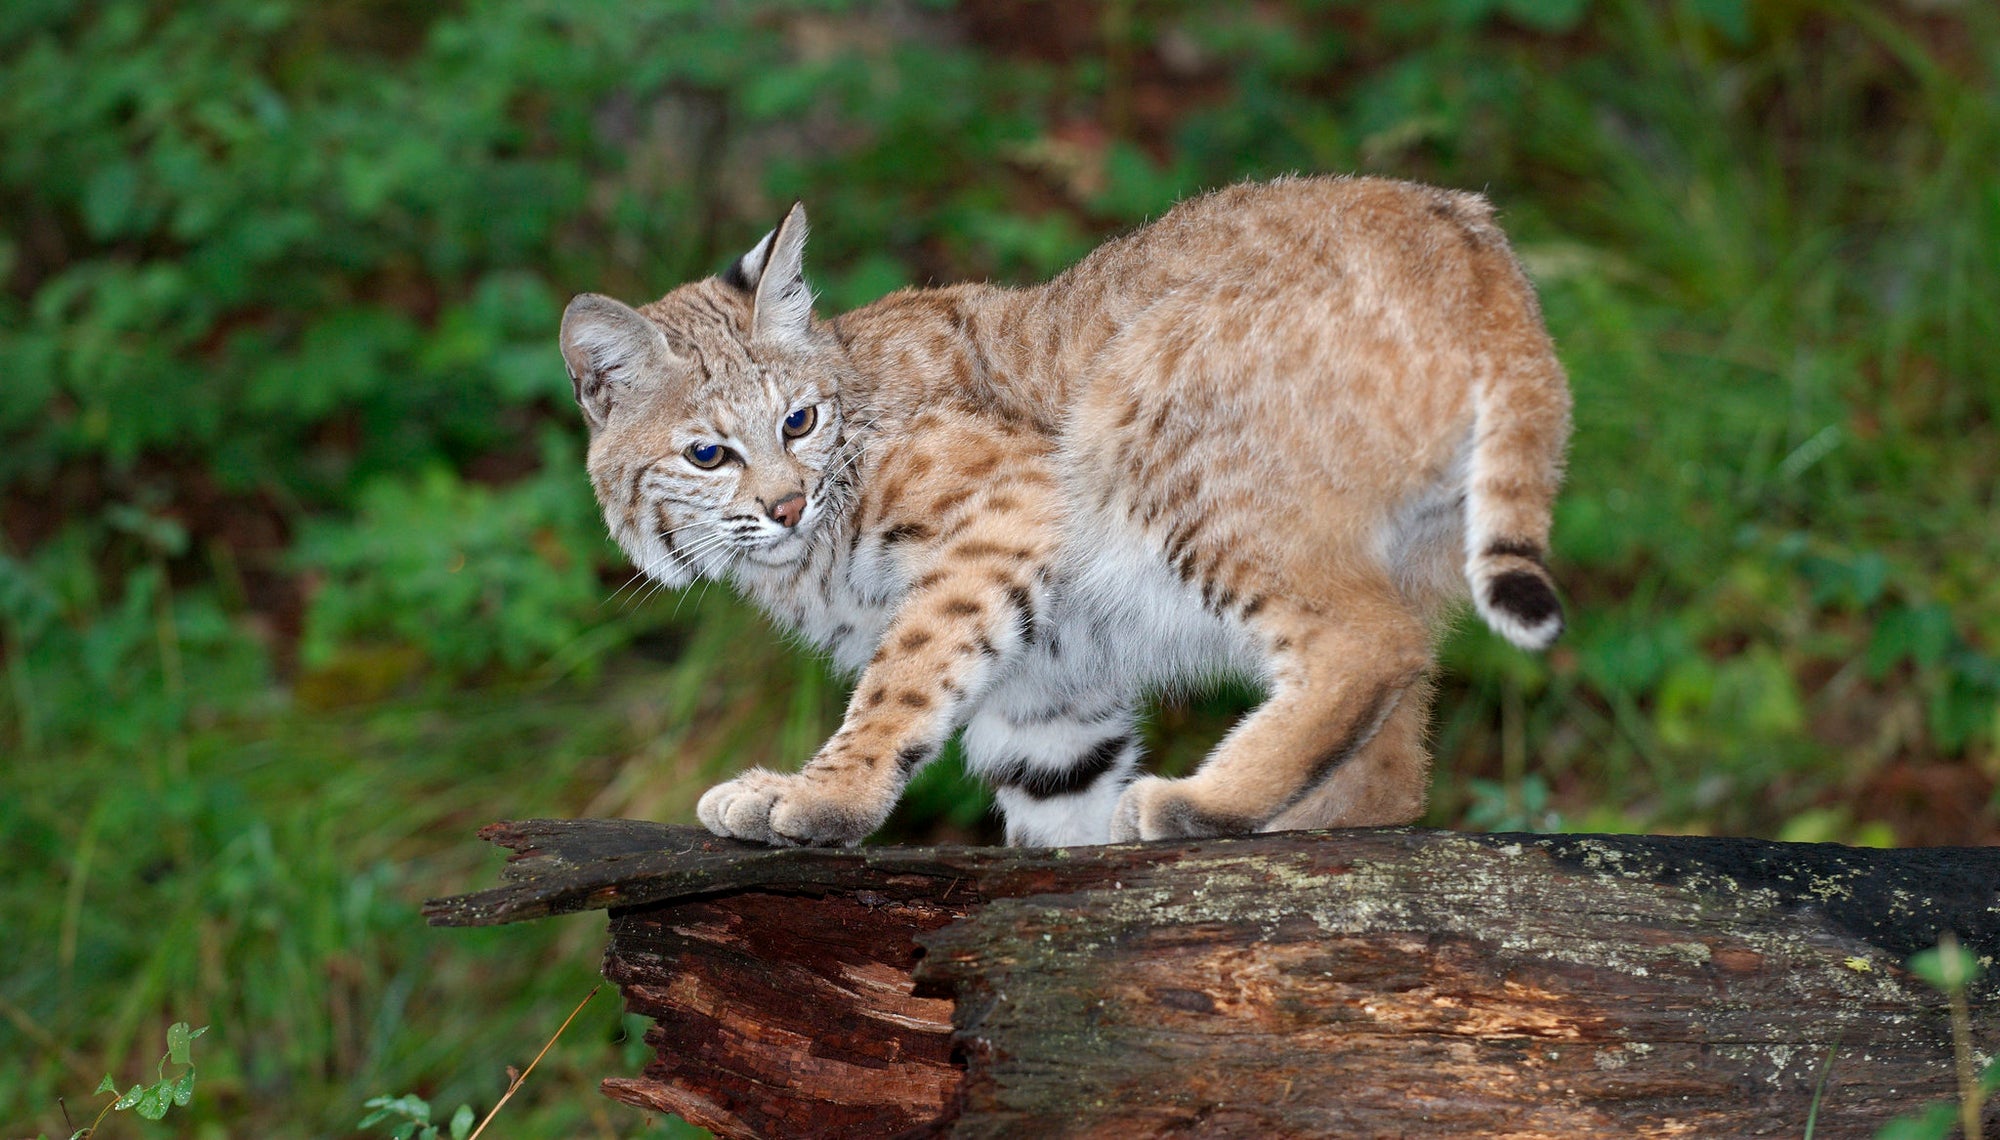 WV Explorer: Help track a bobcat, get a $100 gift card